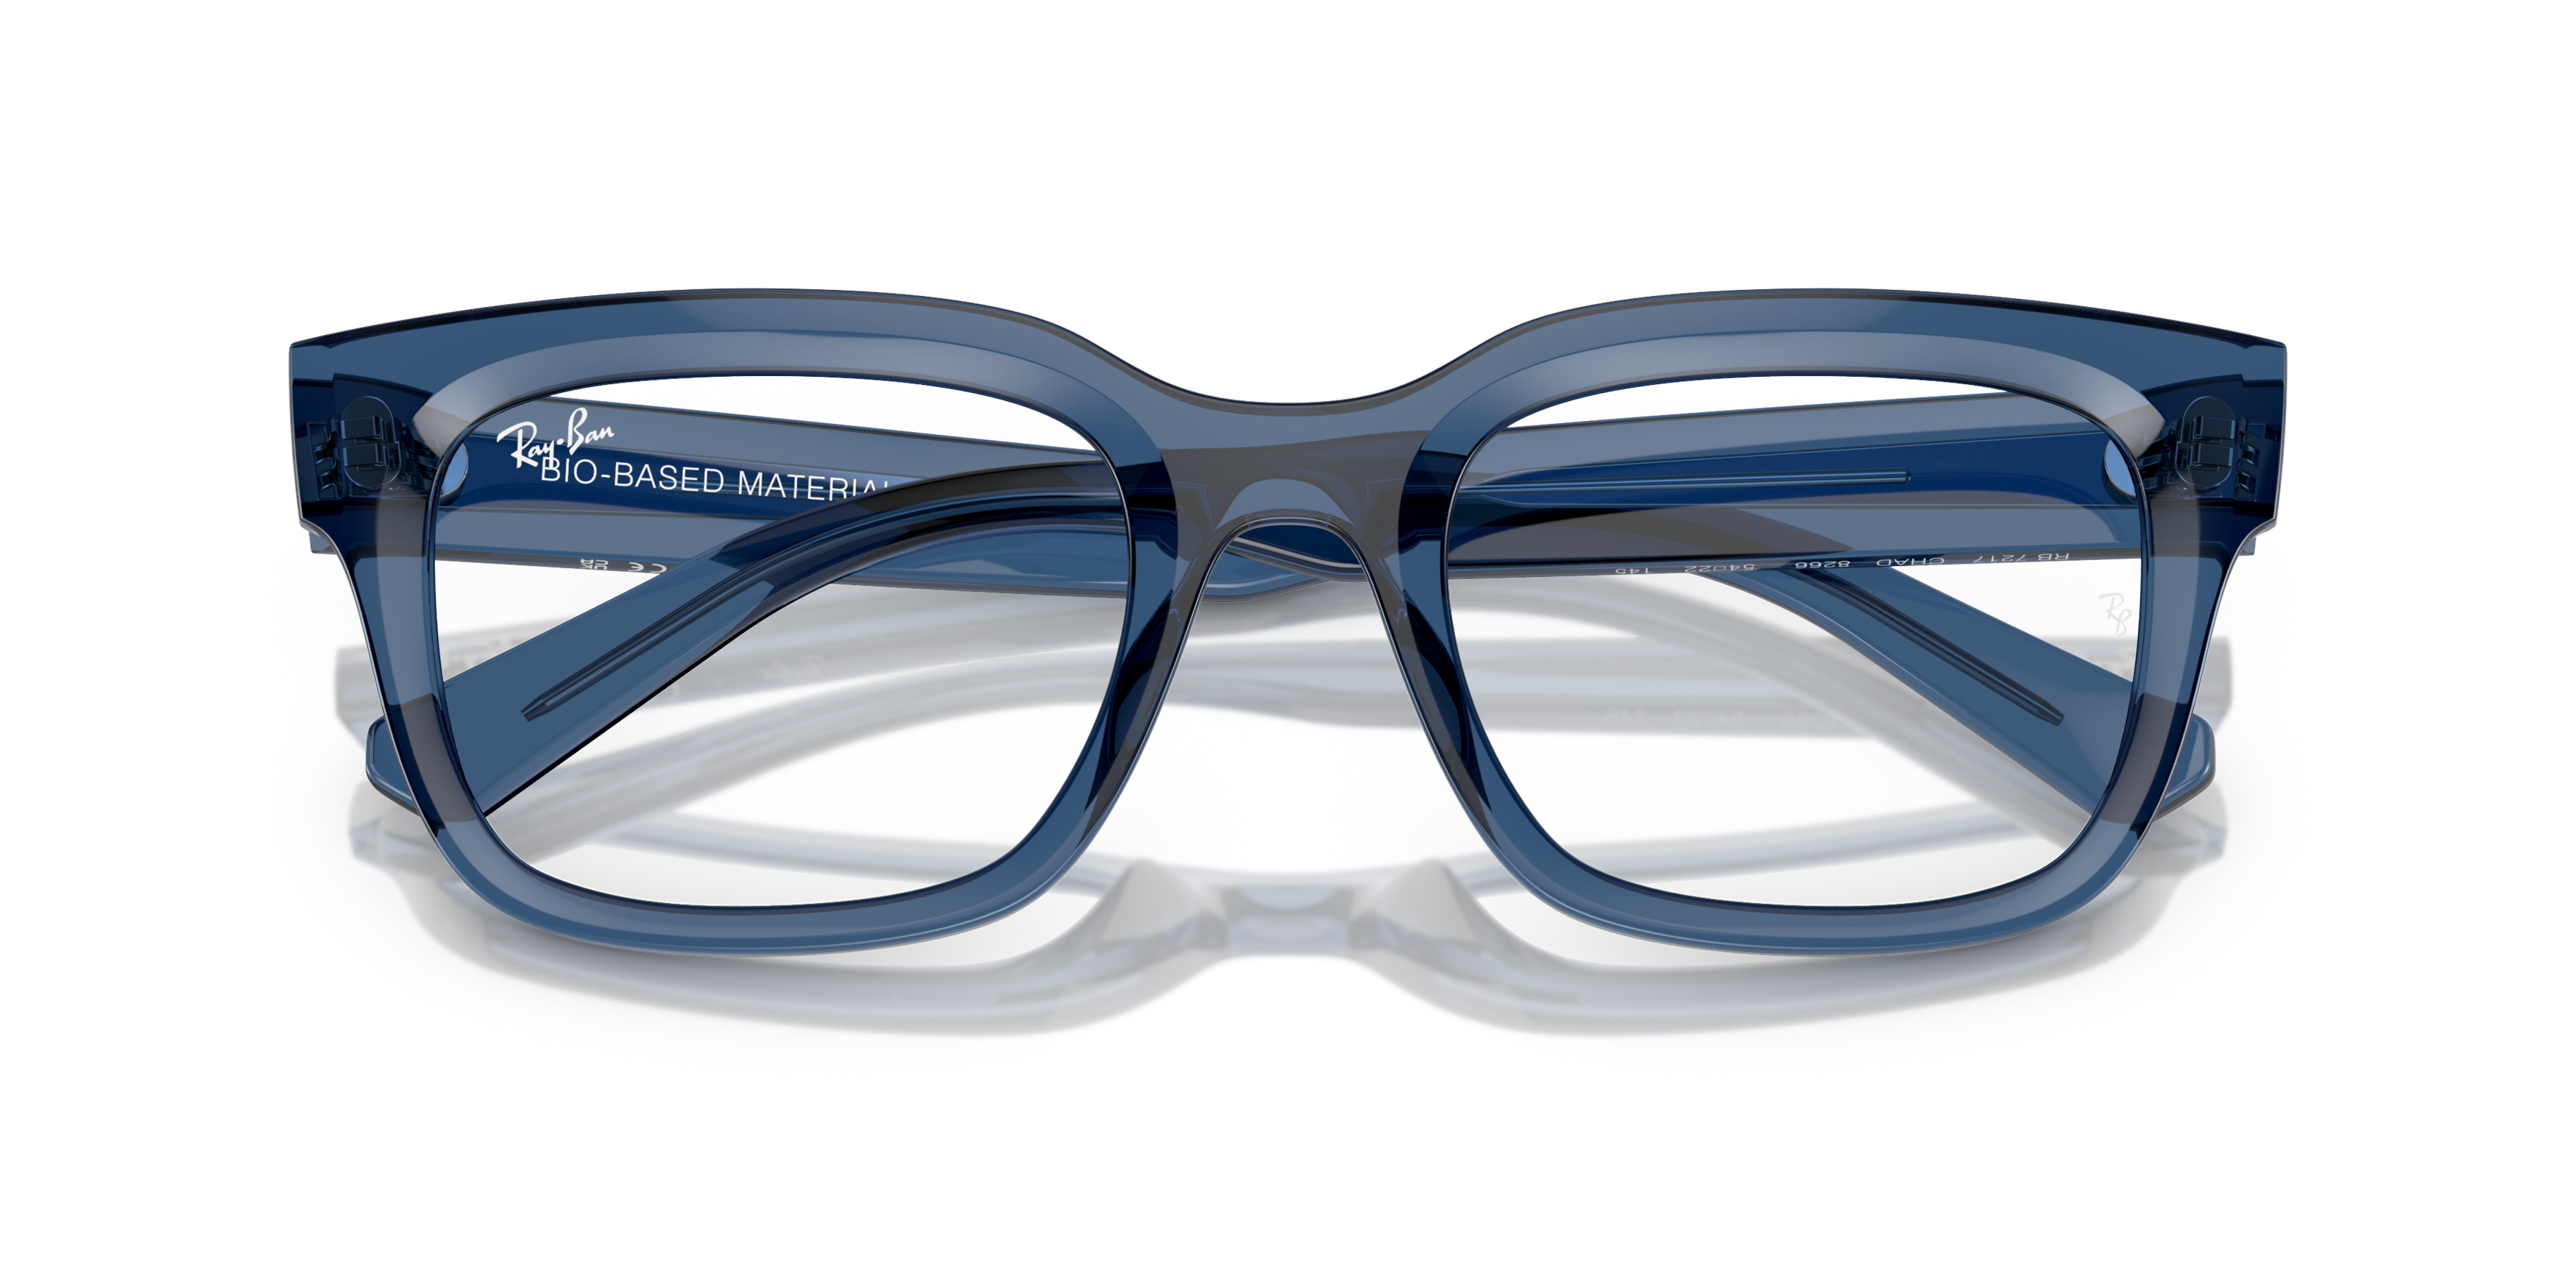 Folded Ray-Ban RX 7217 Glasses Transparent / Transparent, Blue